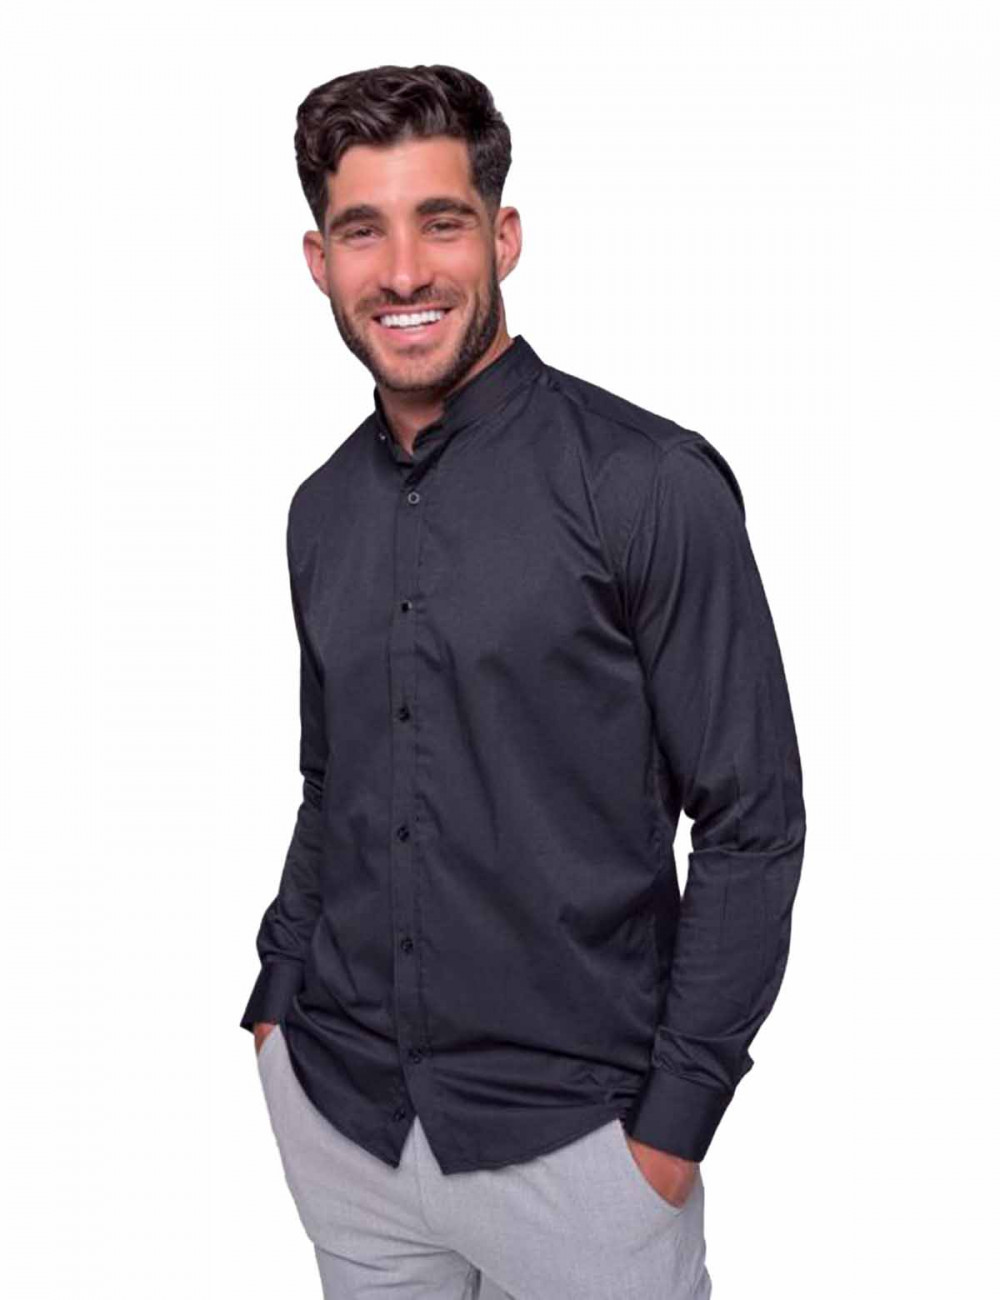 Ben Tailor ανδρικό μαύρο πουκάμισο με μάο γιακά 0589